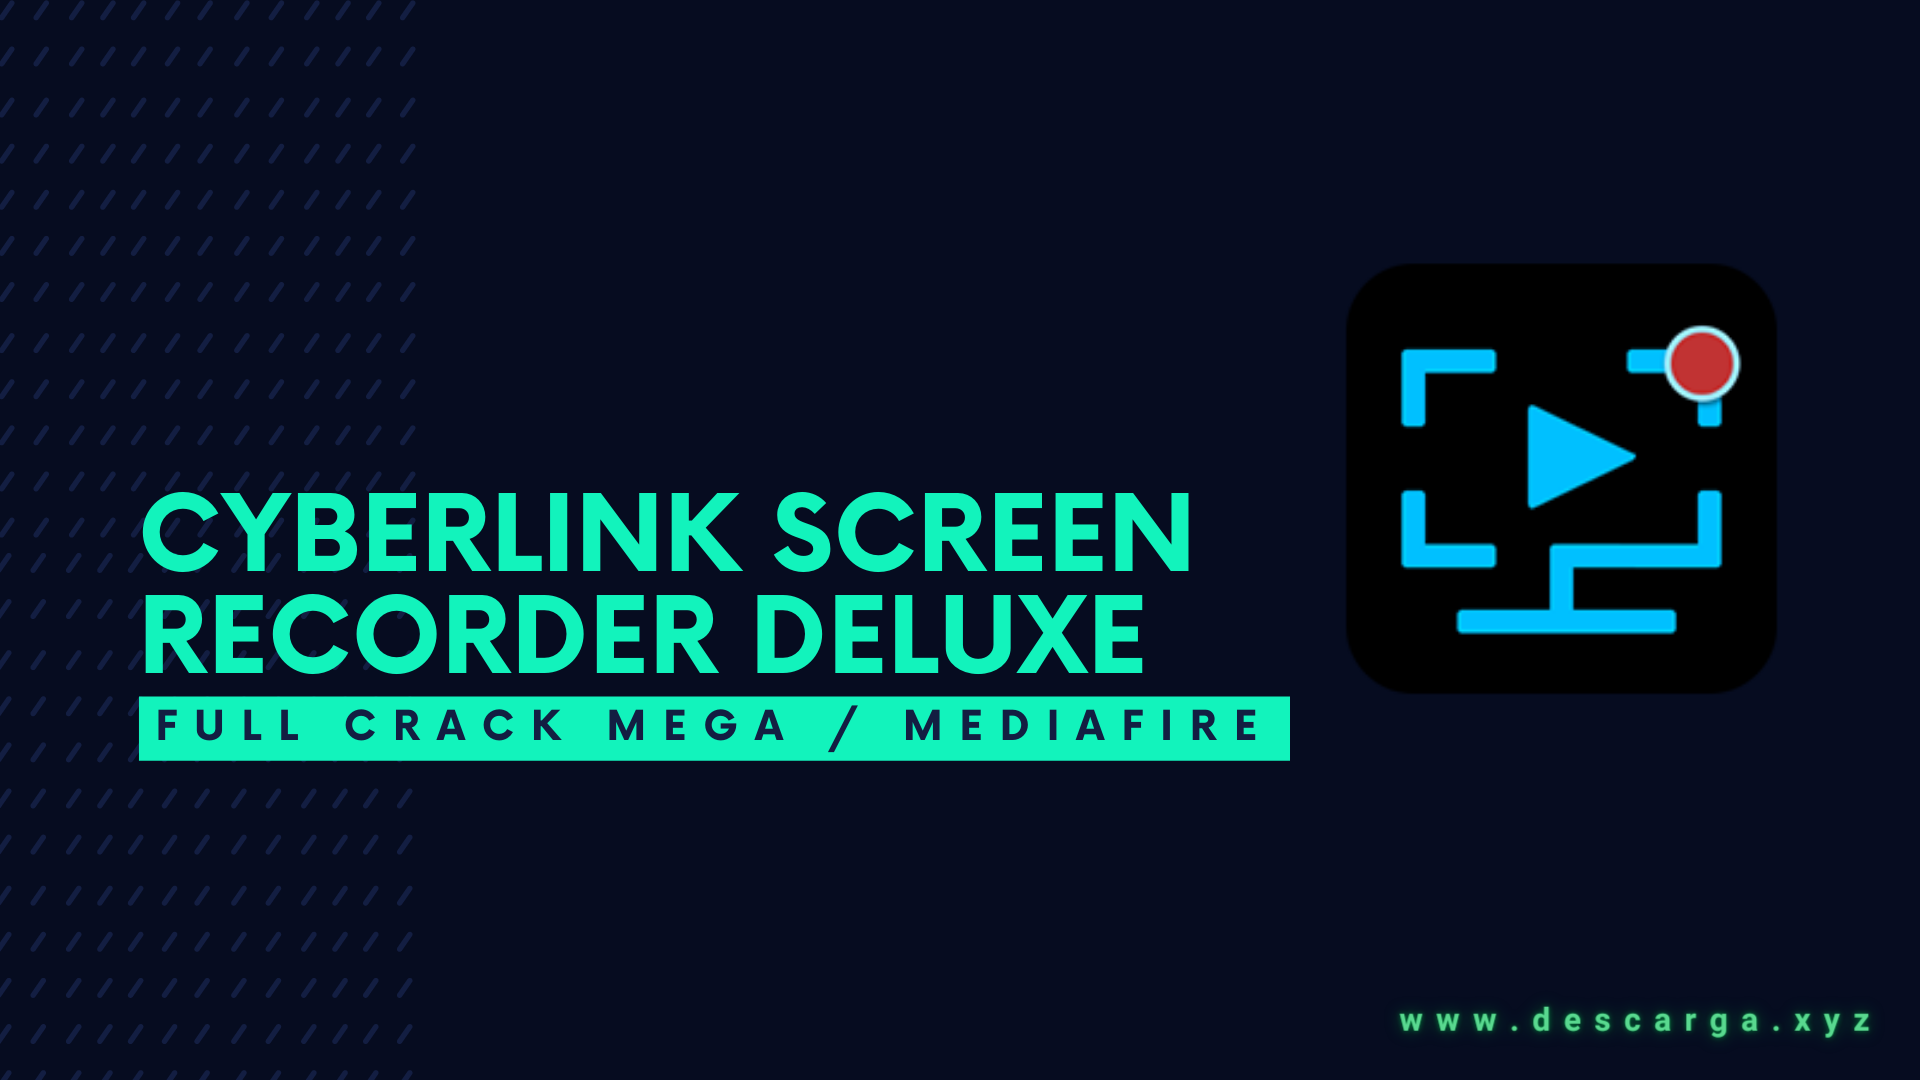 instal the last version for iphoneCyberLink Screen Recorder Deluxe 4.3.1.27960